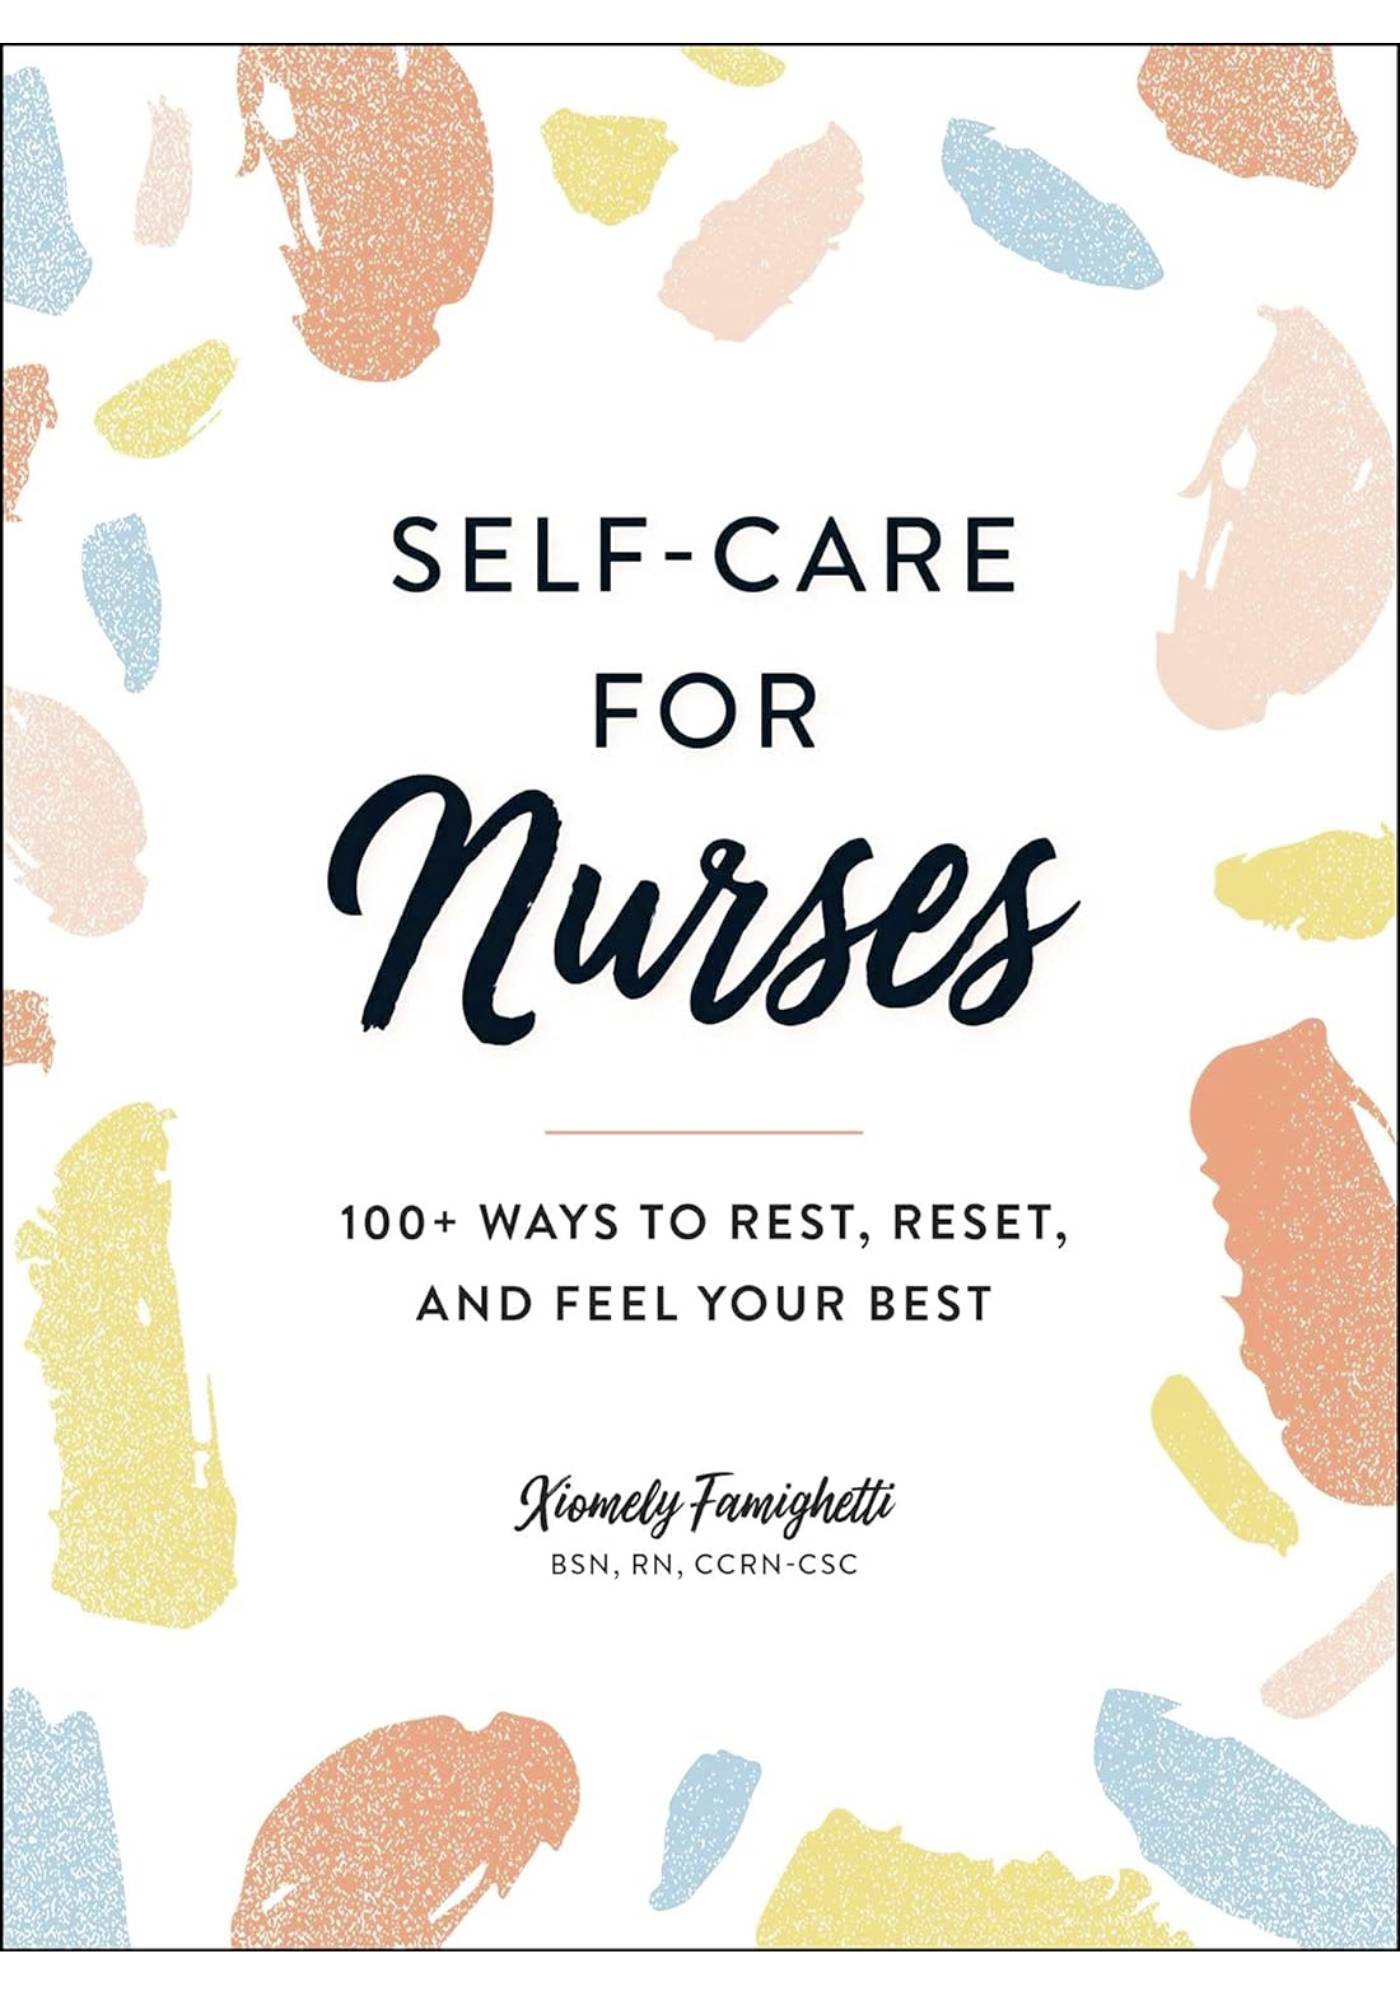 Self-Care for Nurses